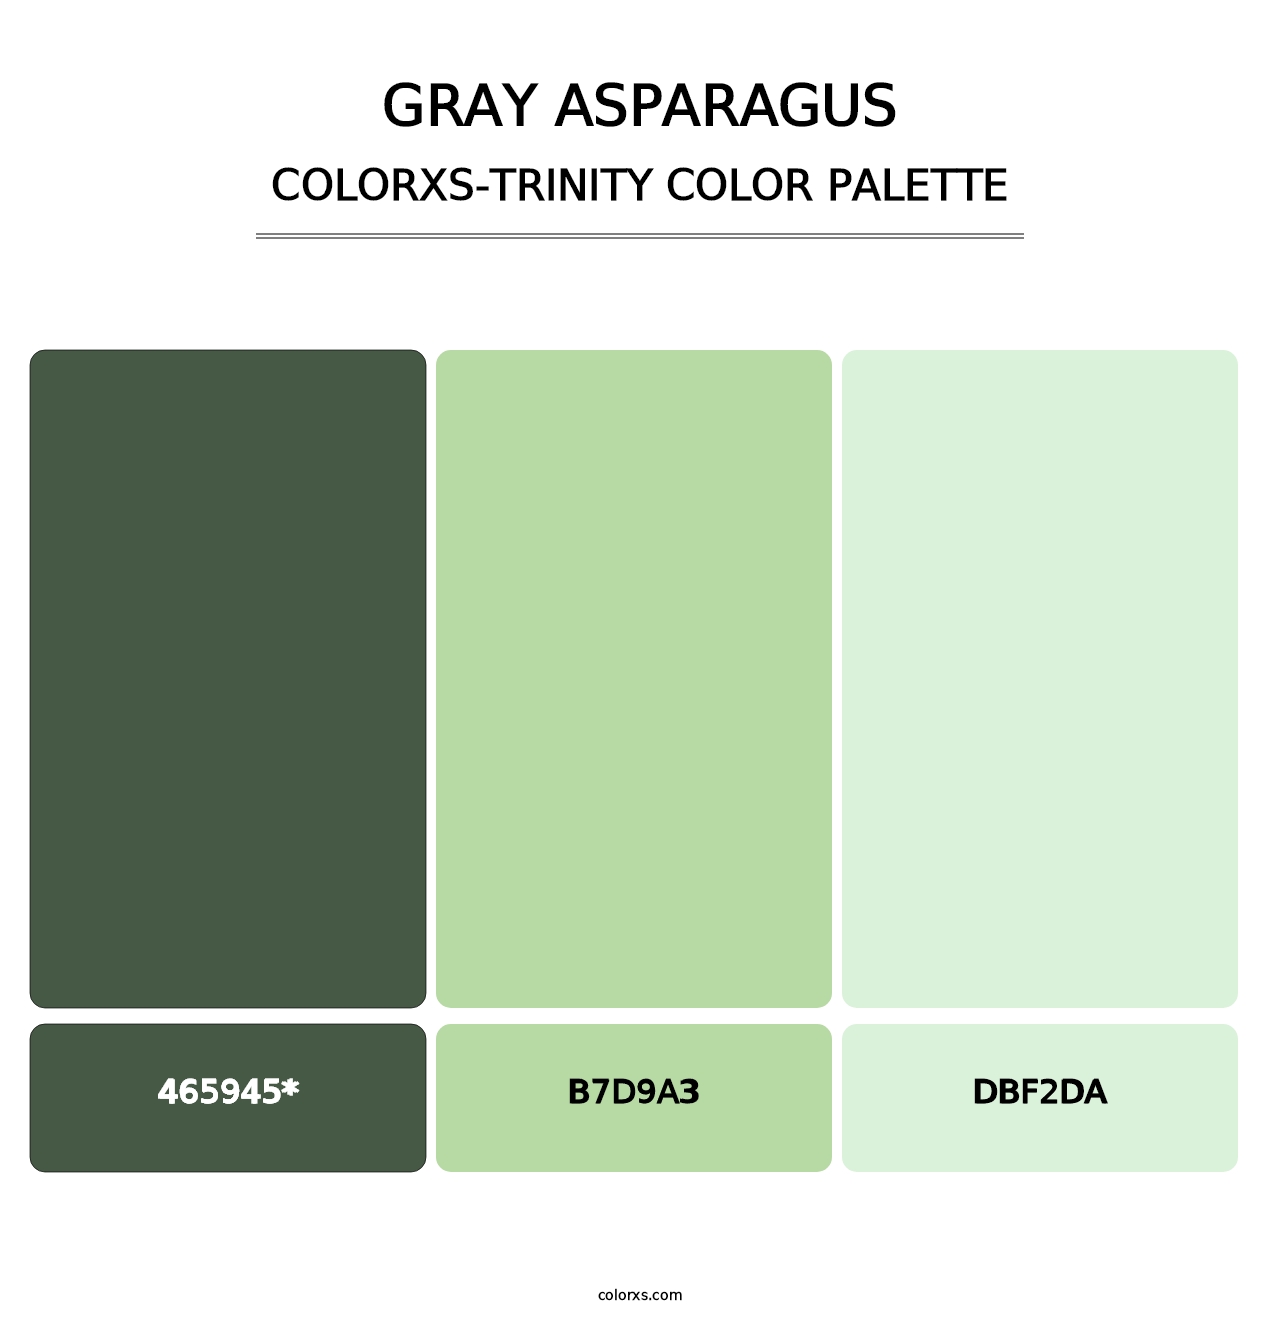 Gray Asparagus - Colorxs Trinity Palette